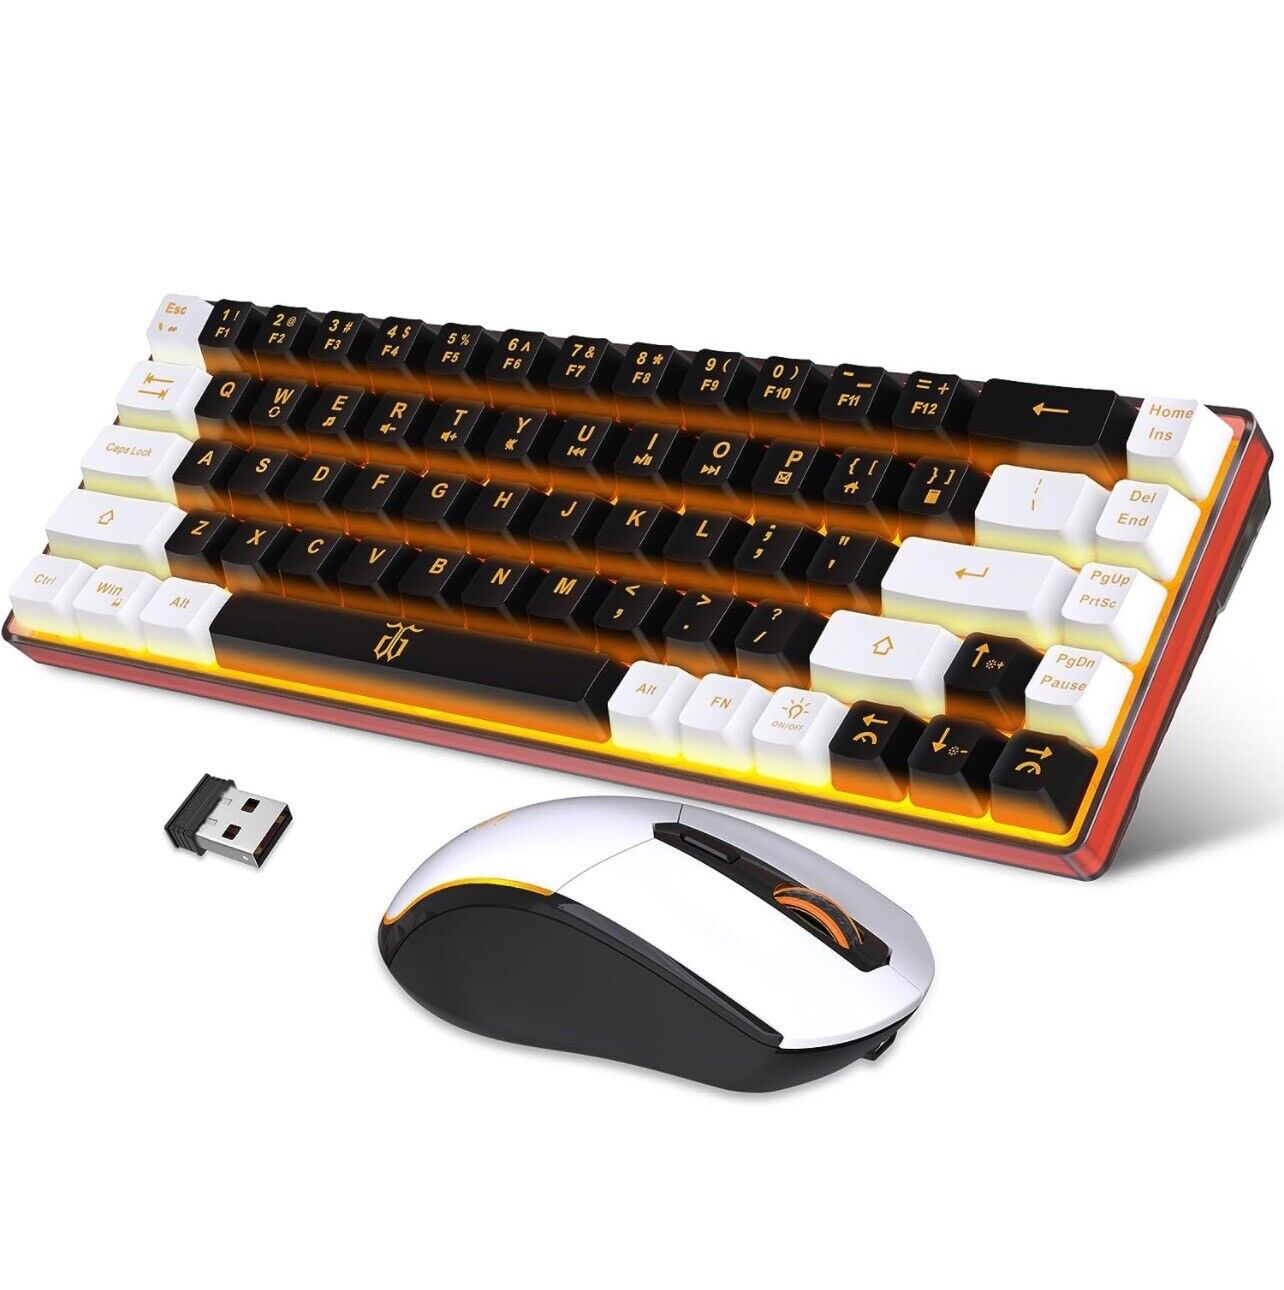 60% Keyboard 2.4G Wireless Mouse Combo Merchanical Feel RGB Backlit Ergonomic